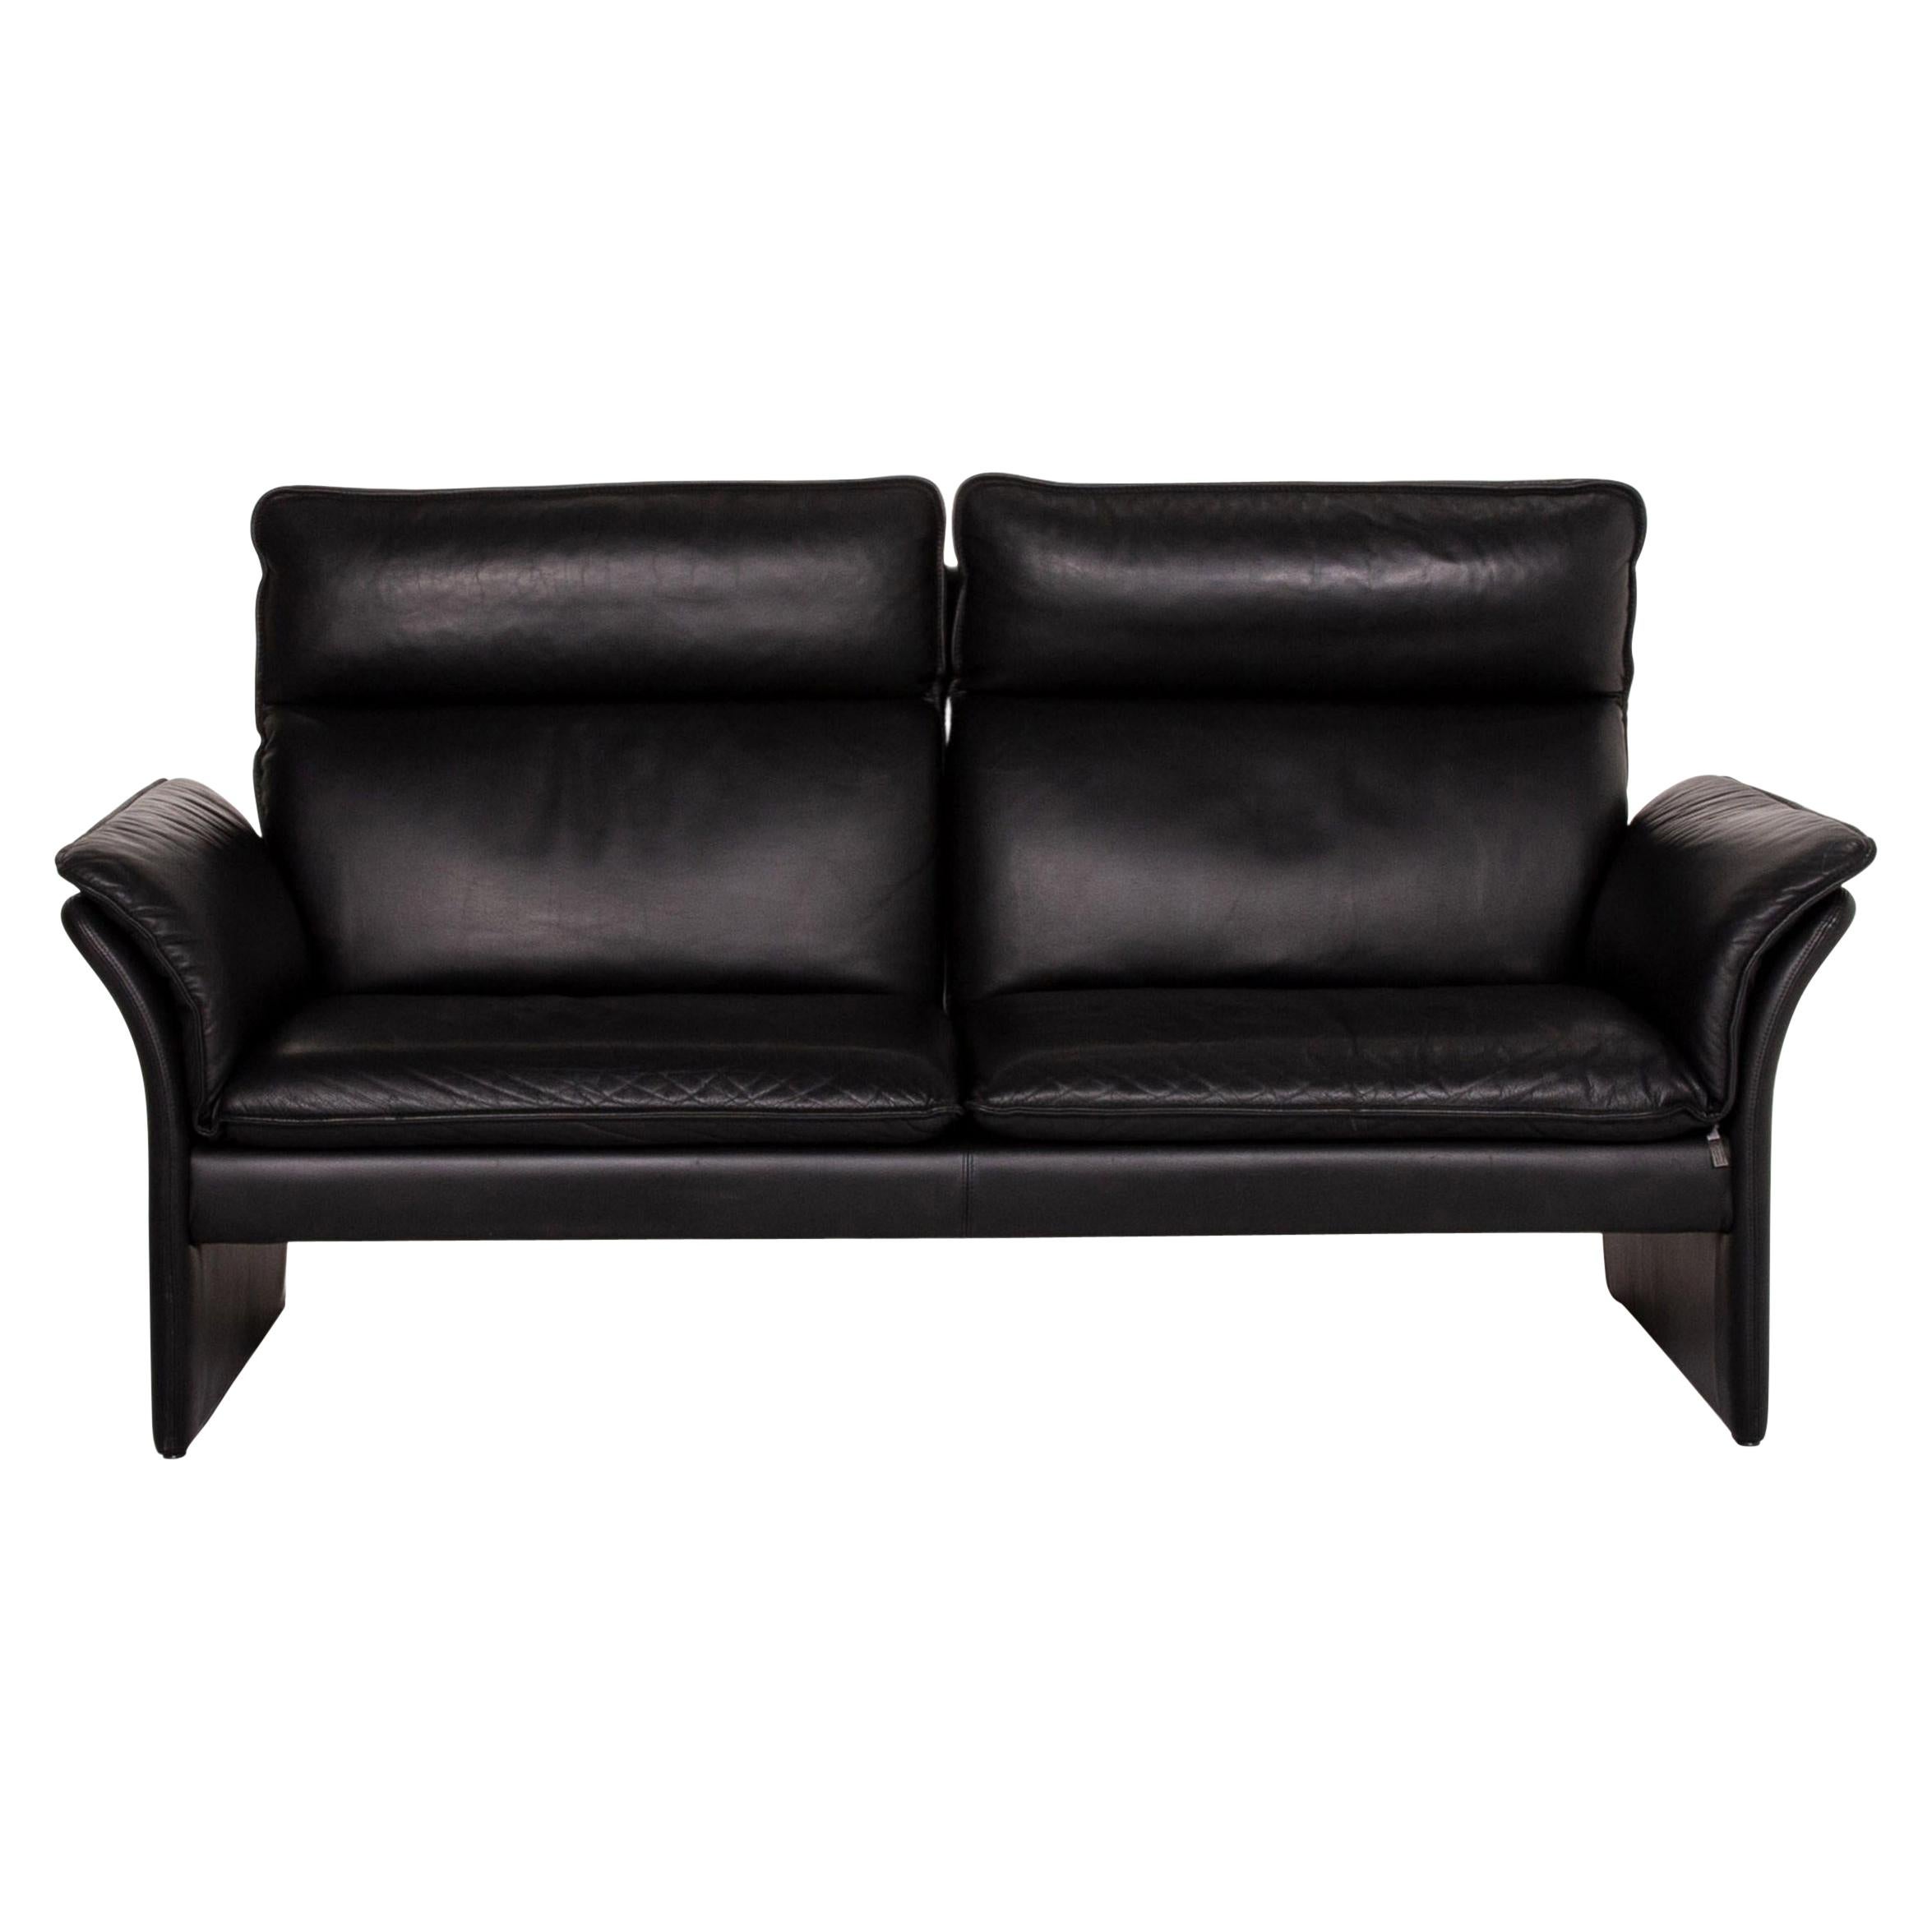 Three-Point Scala Leather Sofa Black Three-Seat Couch